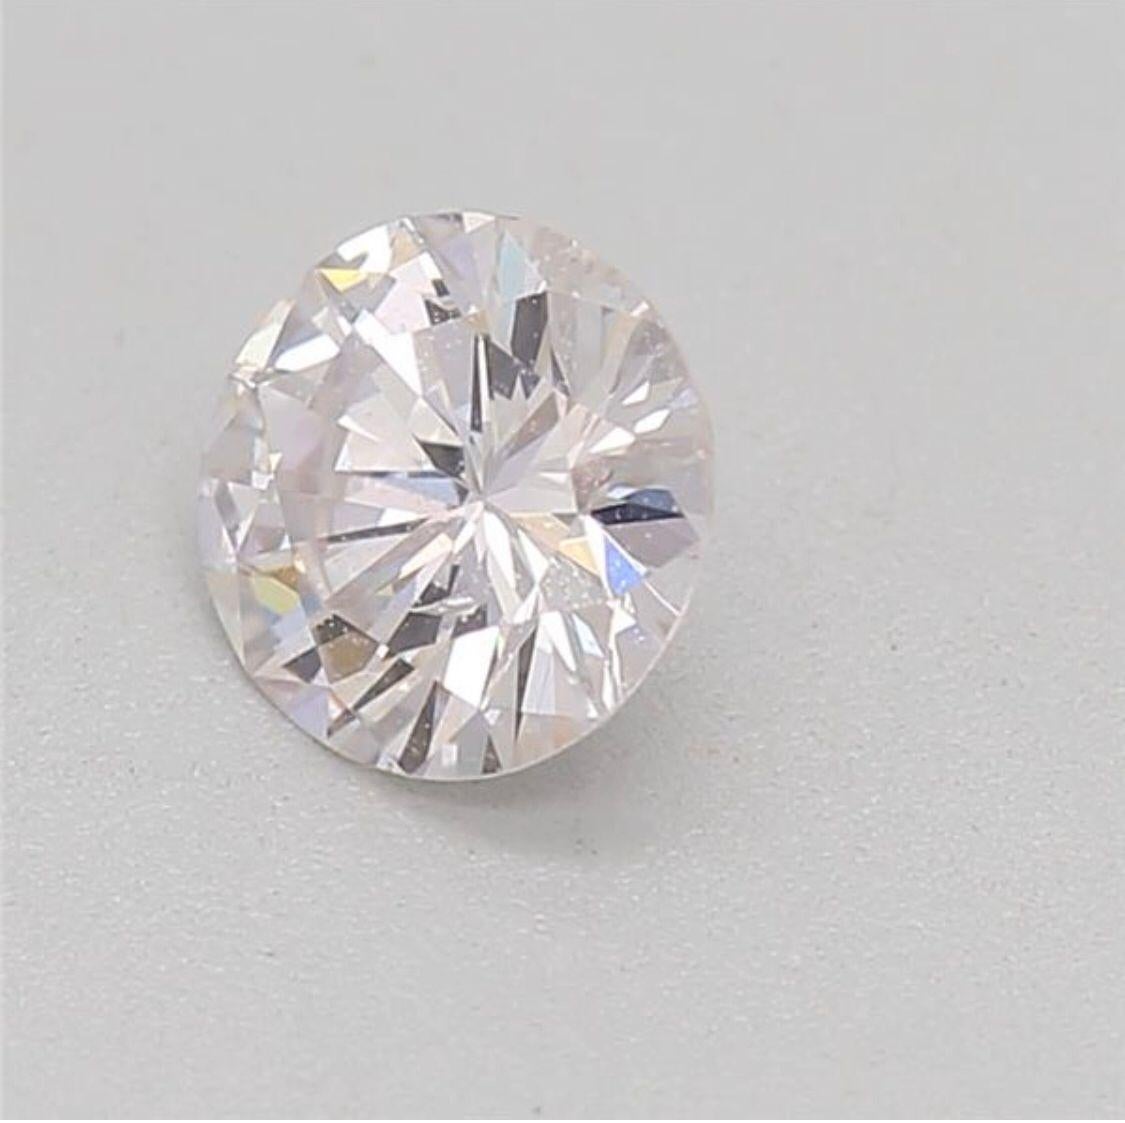 Diamant rose pâle taille ronde de 0,31 carat de pureté SI1 certifié CGL en vente 7